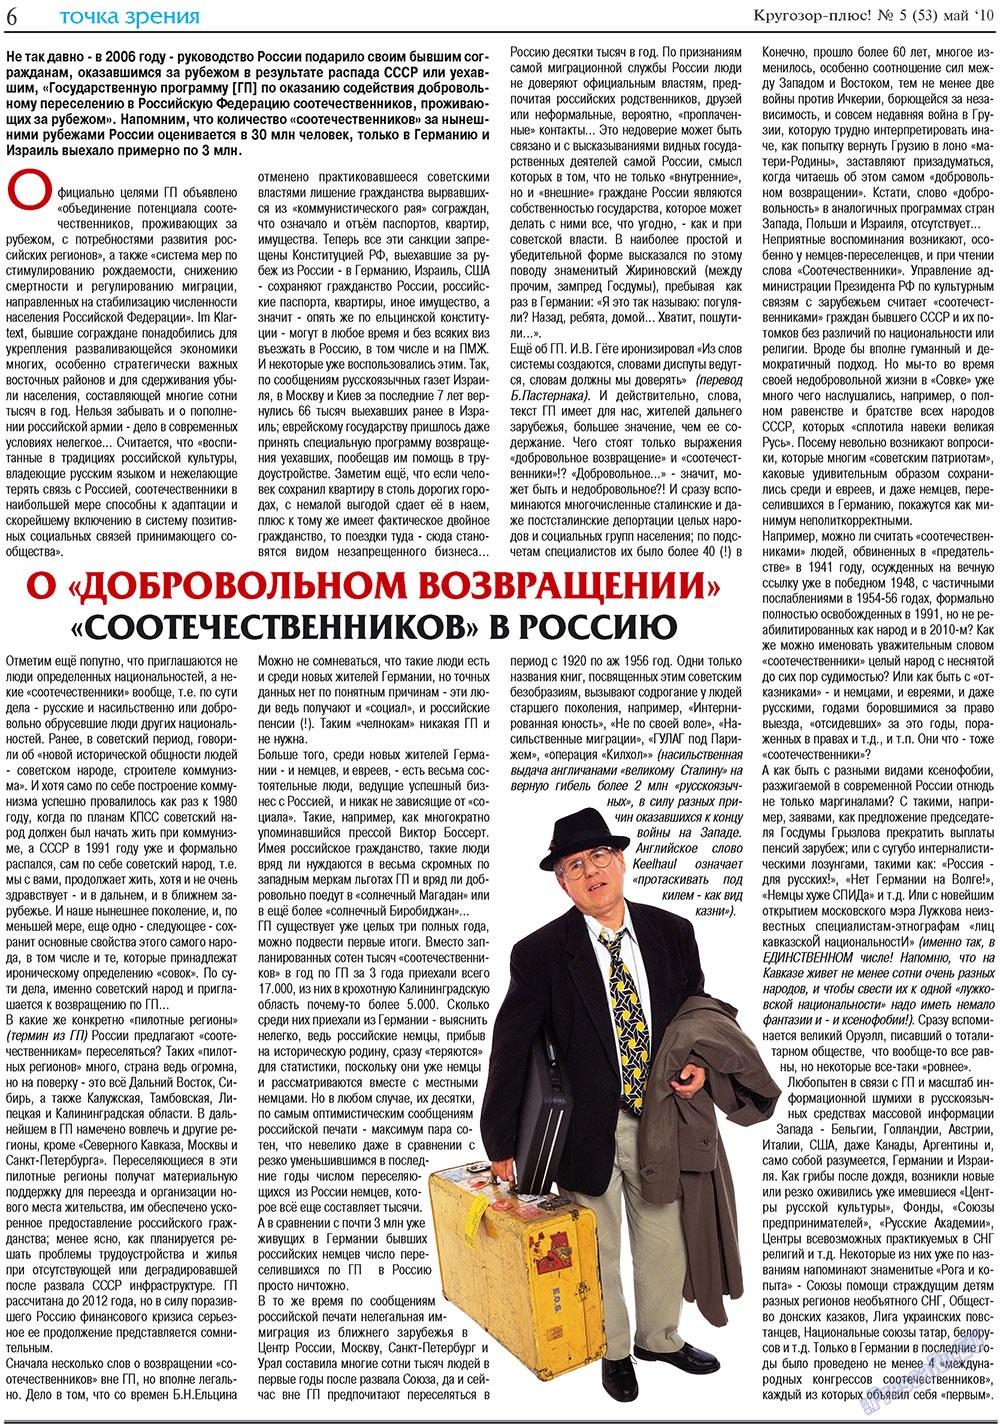 Кругозор плюс! (газета). 2010 год, номер 5, стр. 22